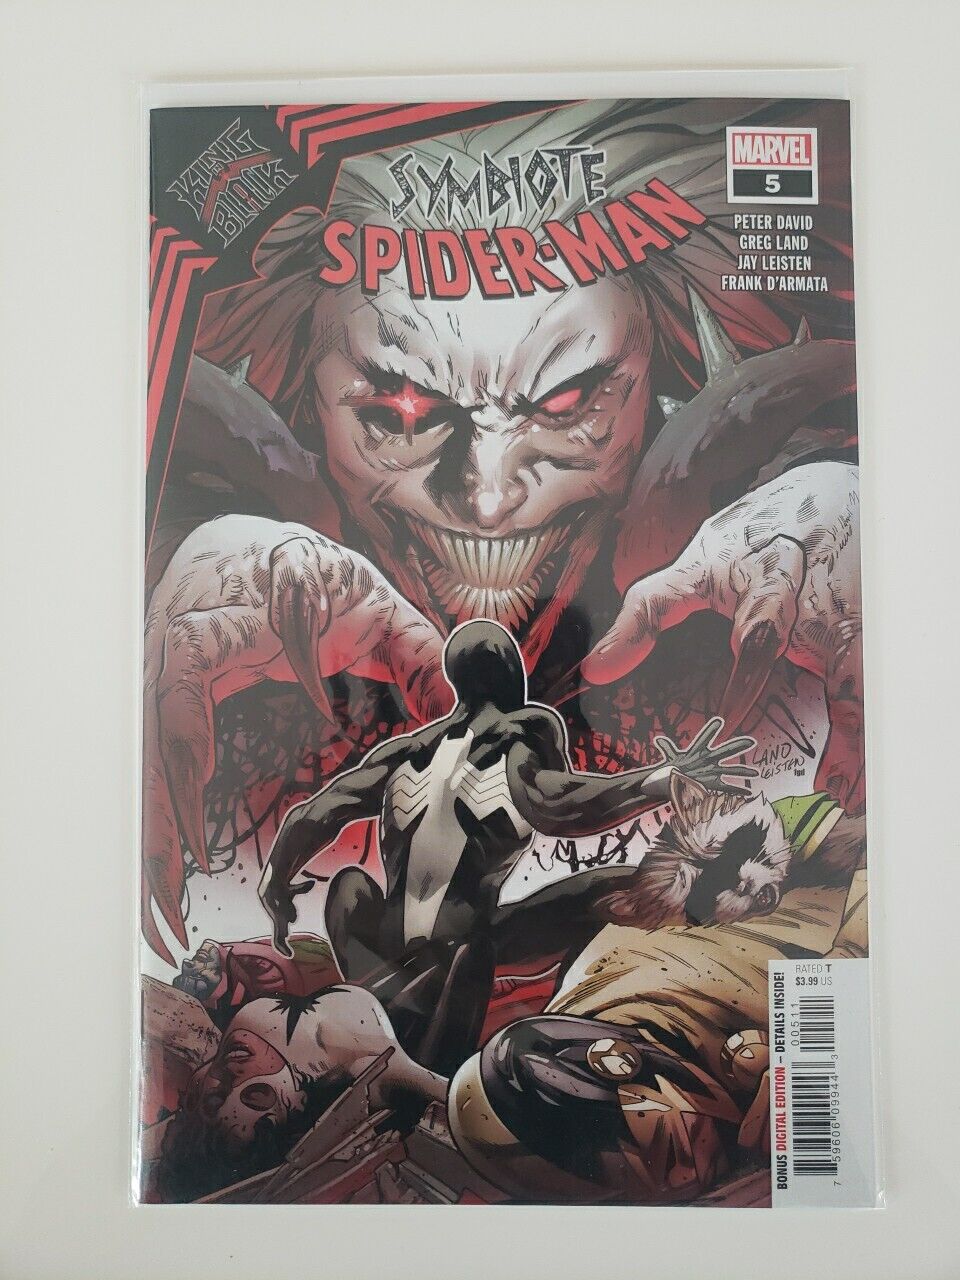 Symbiote Spider-Man: King in Black #5 in NM. Marvel comics